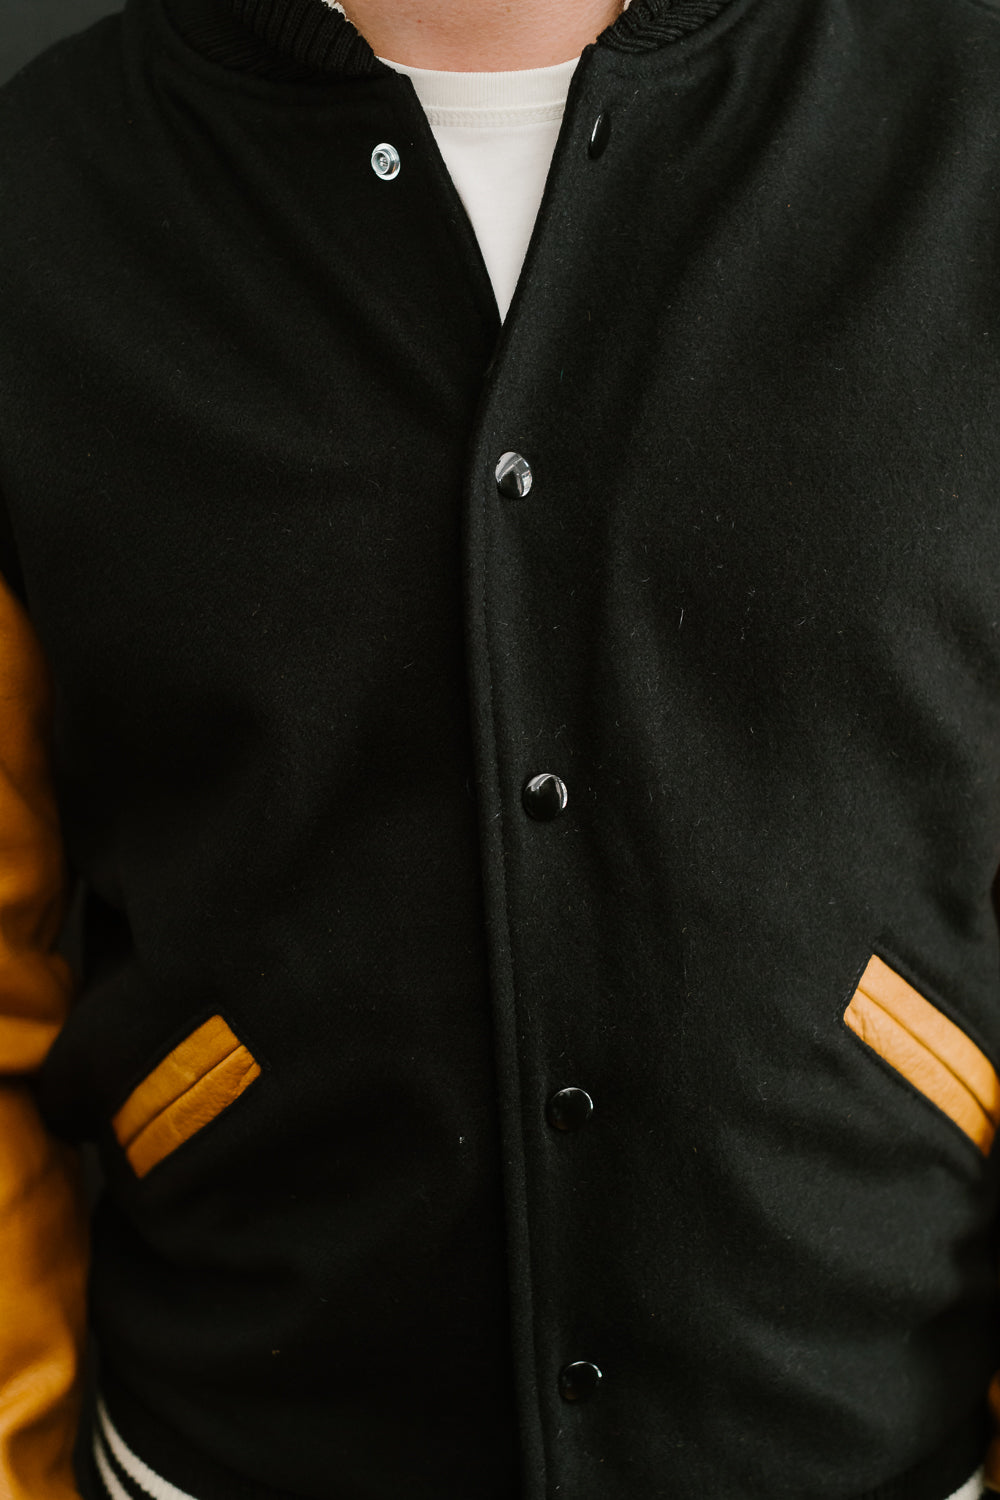 Black and Gold Varsity Jacket